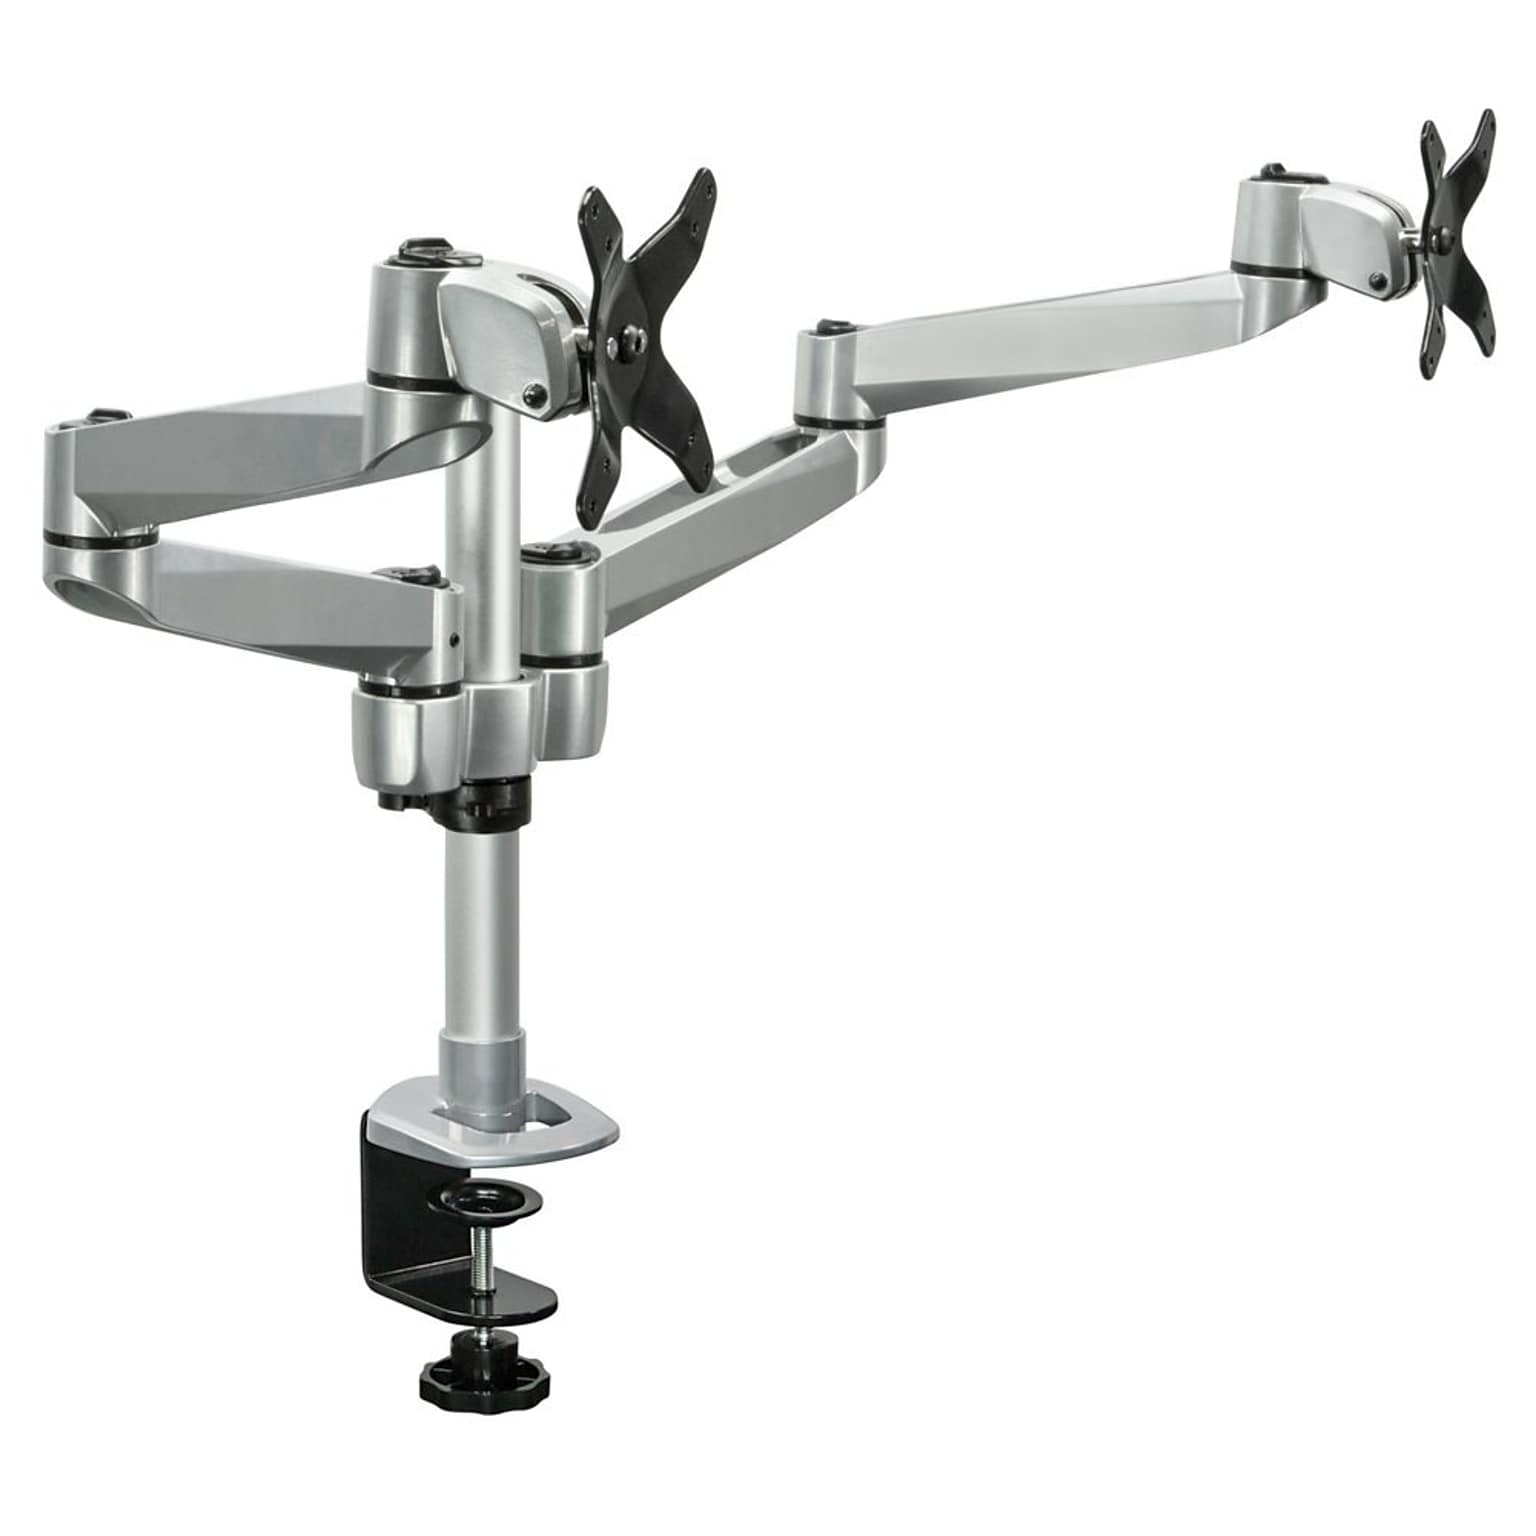 Mount-It! Modular Desk Mount Adjustable Monitor Arm, Up to 27 Monitors, Gray/Silver (MI-43116)